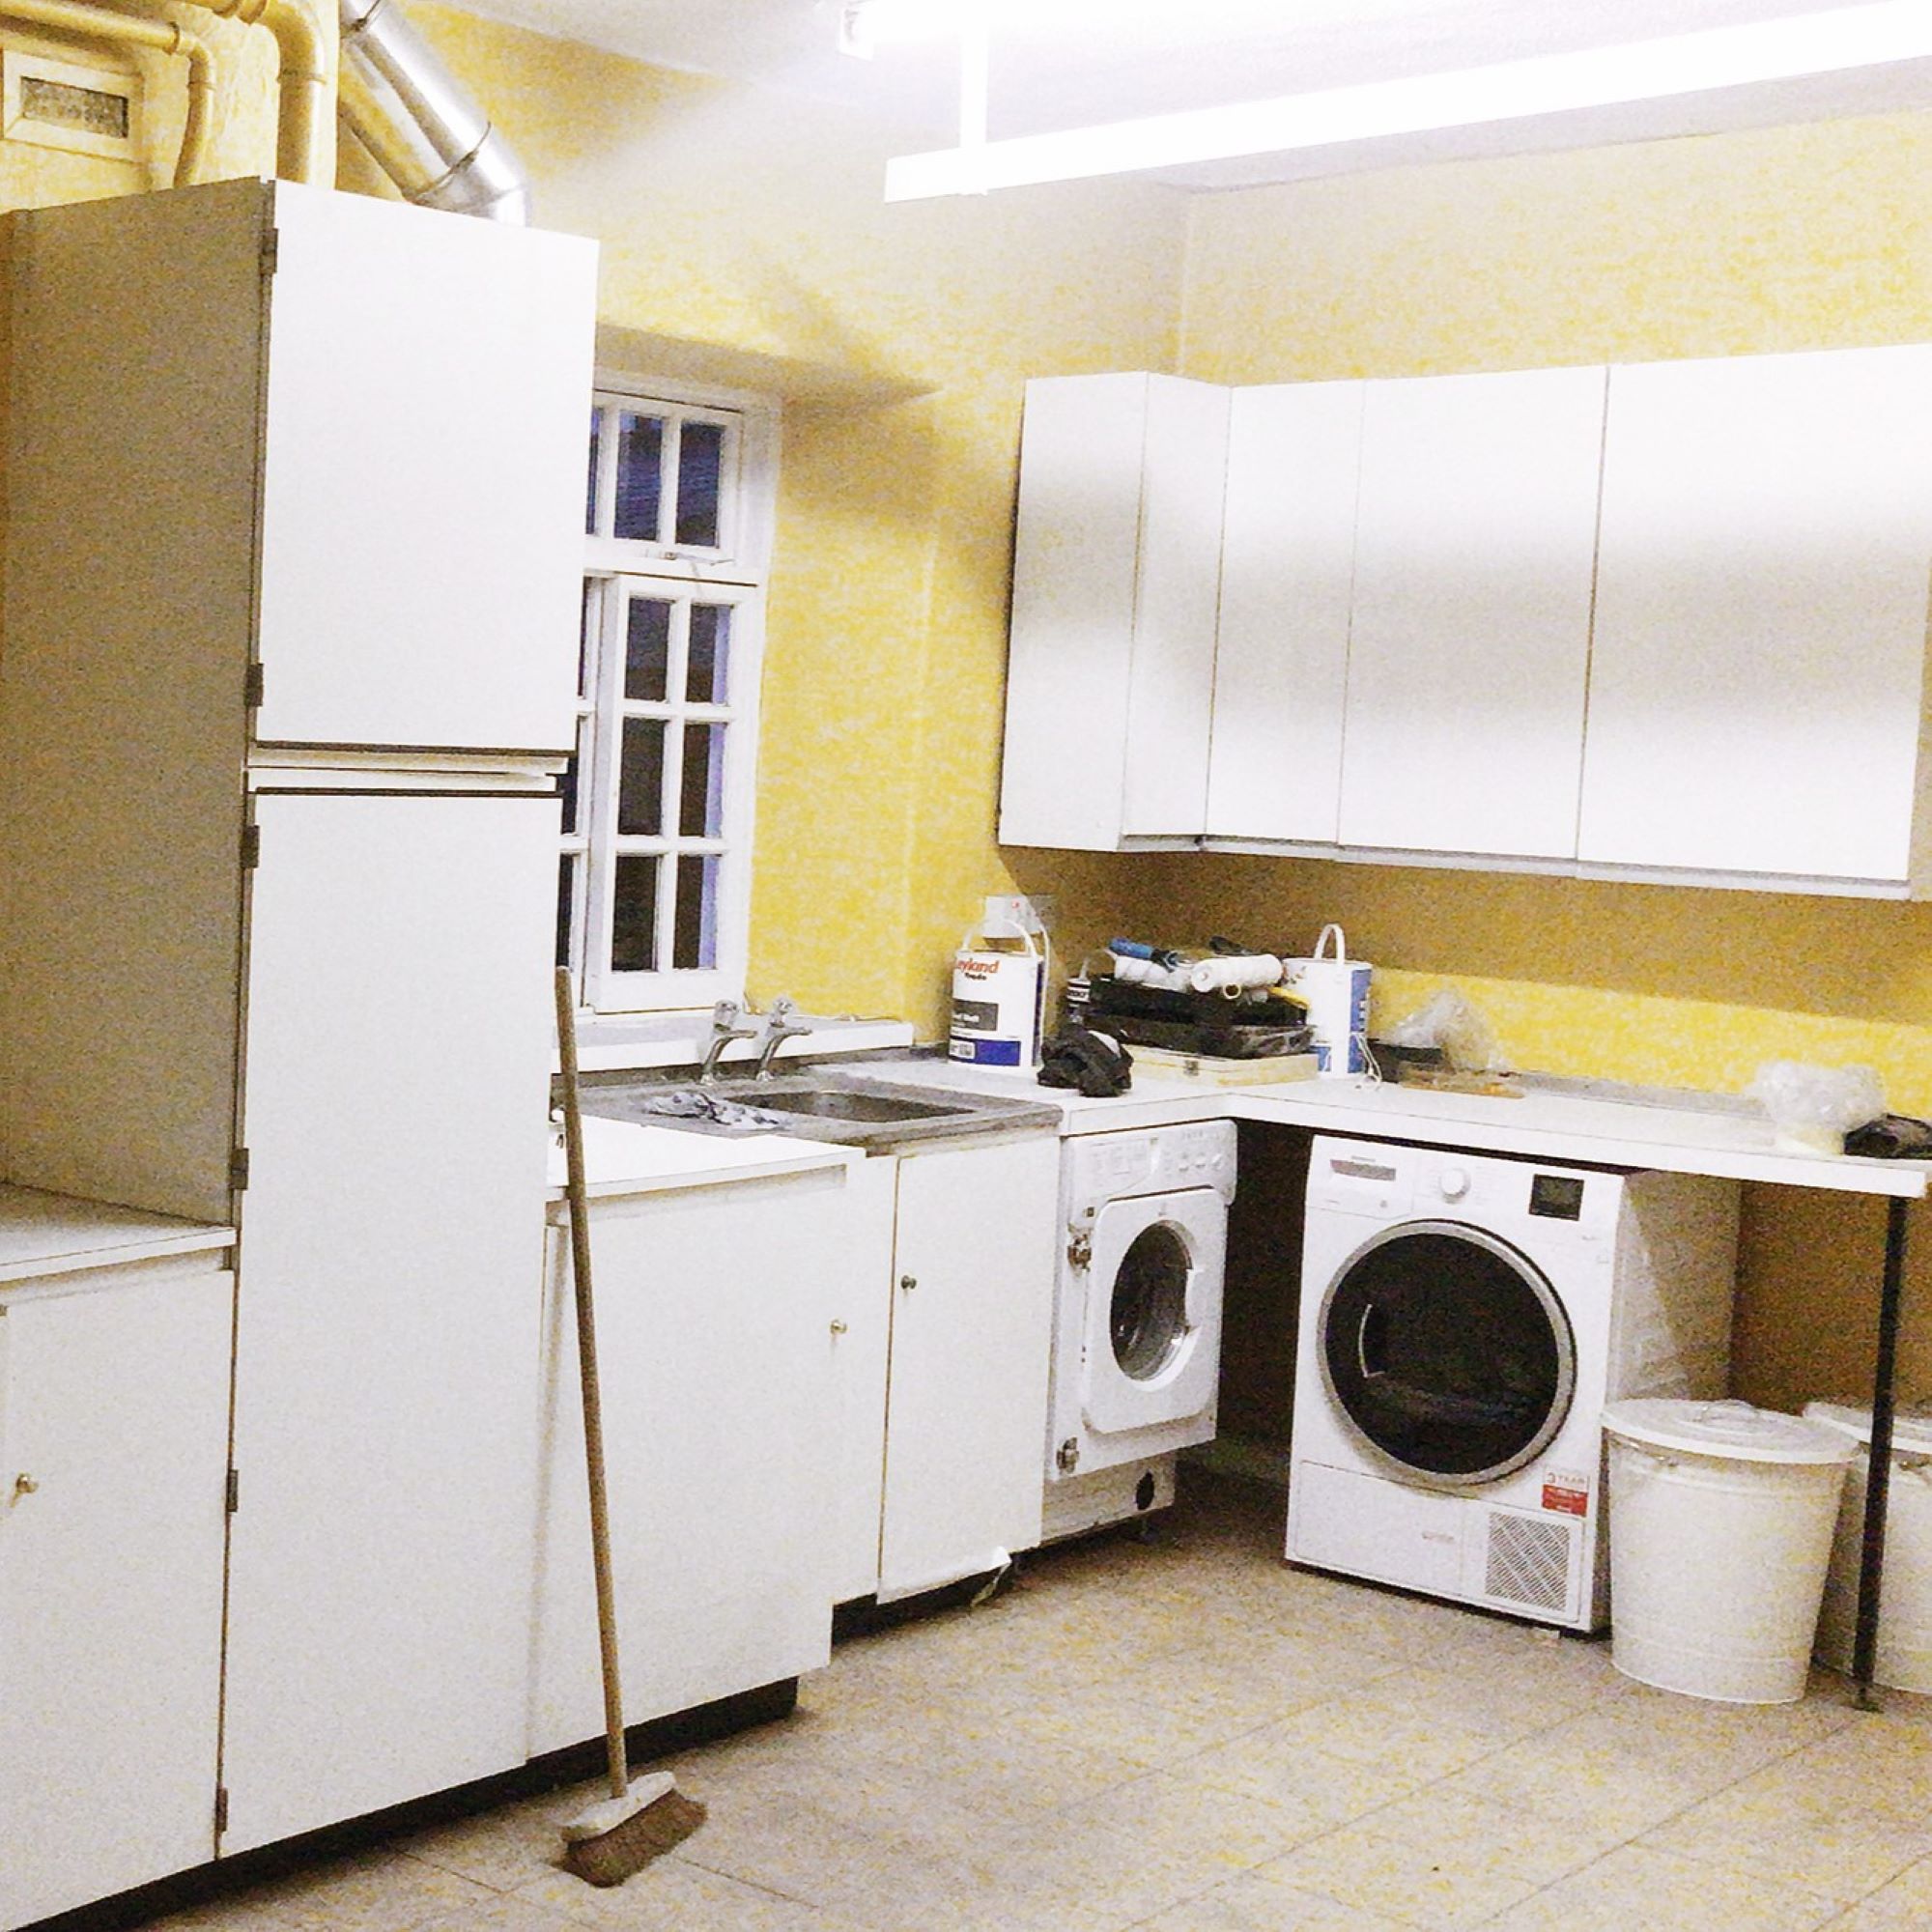 yellow utility room with washing machine